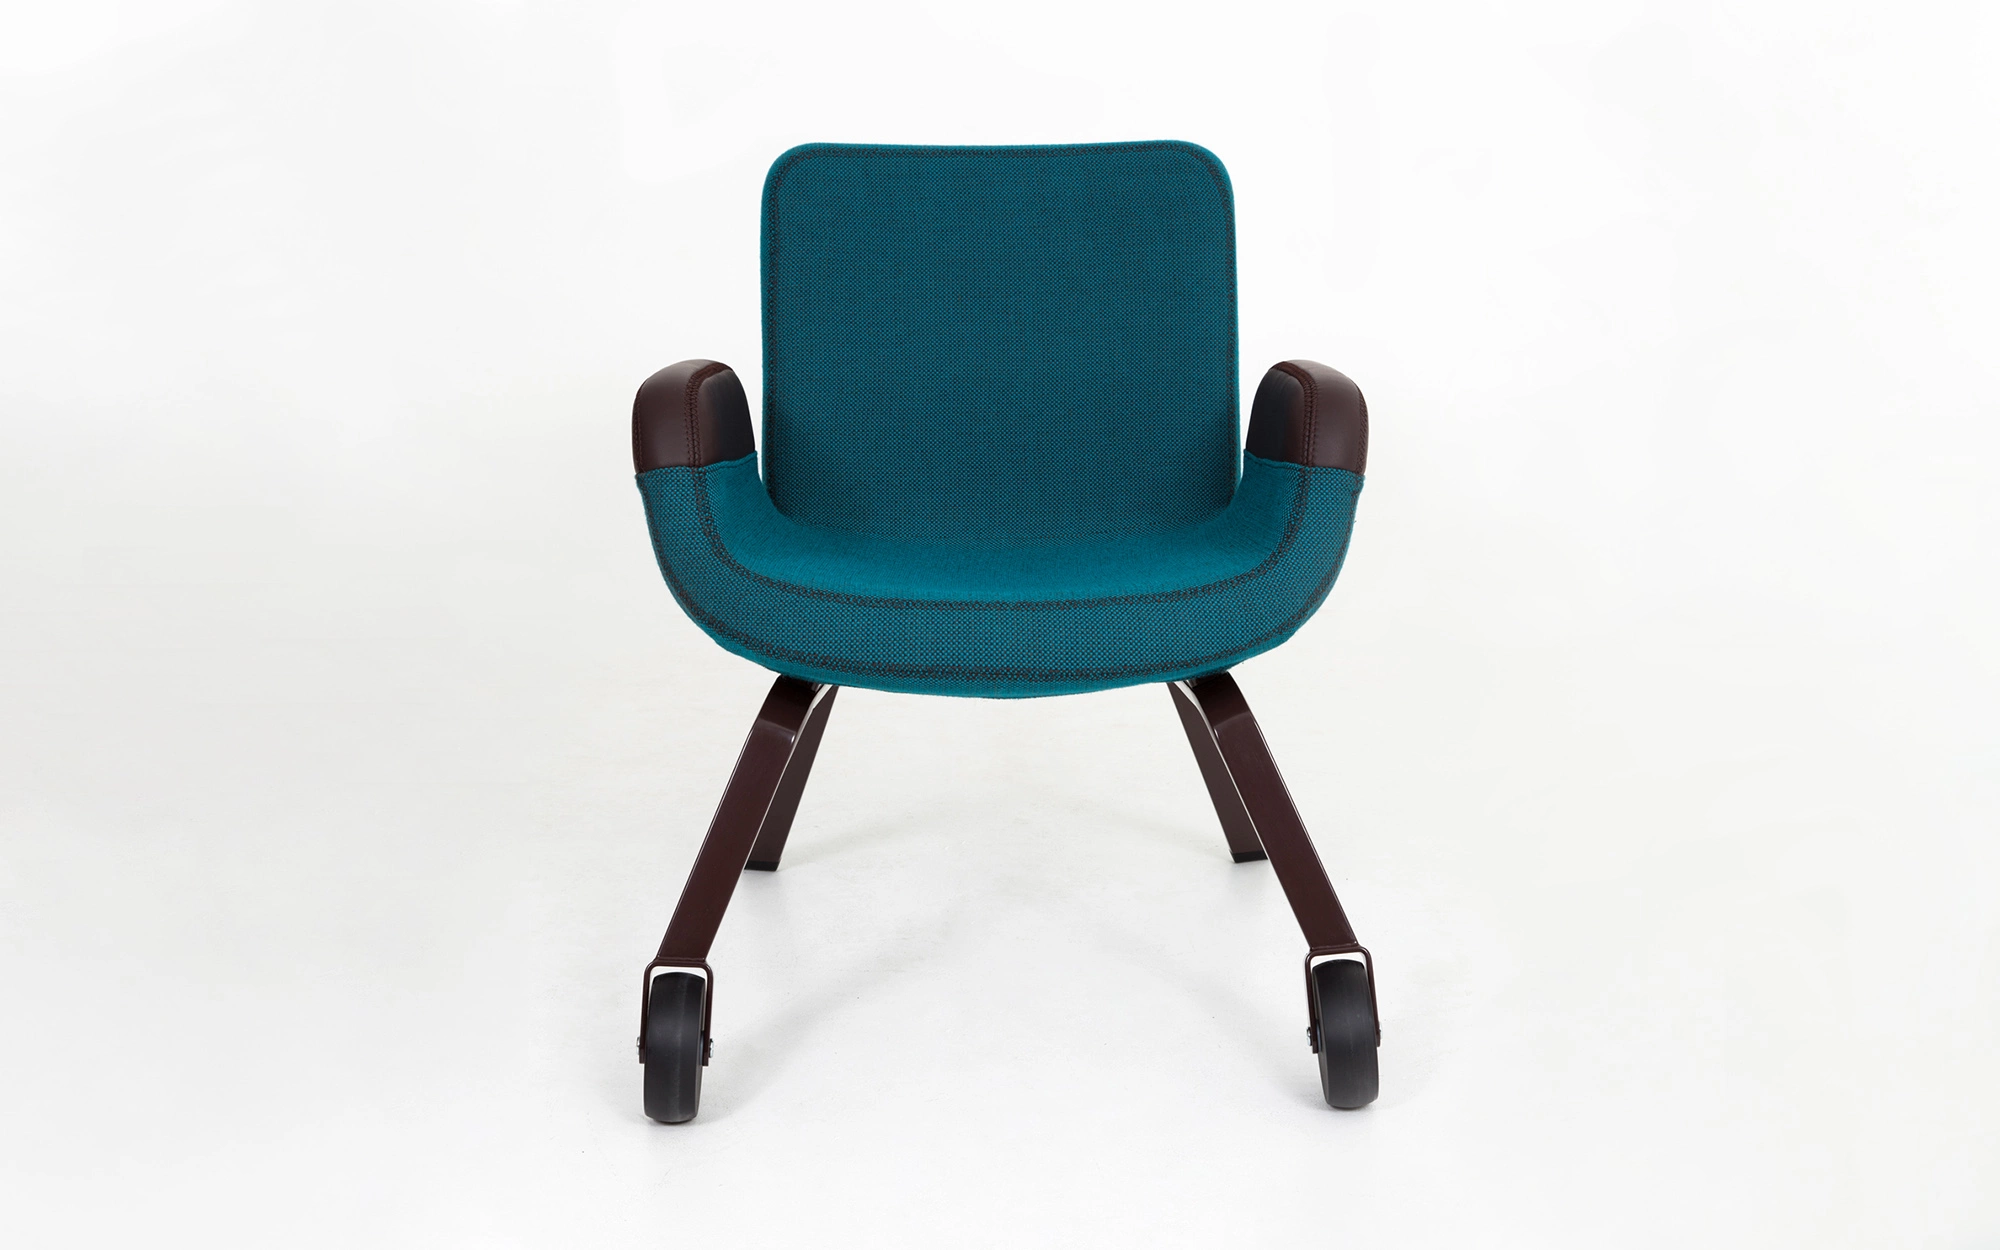 Hella Jongerius UN Lounge Chair